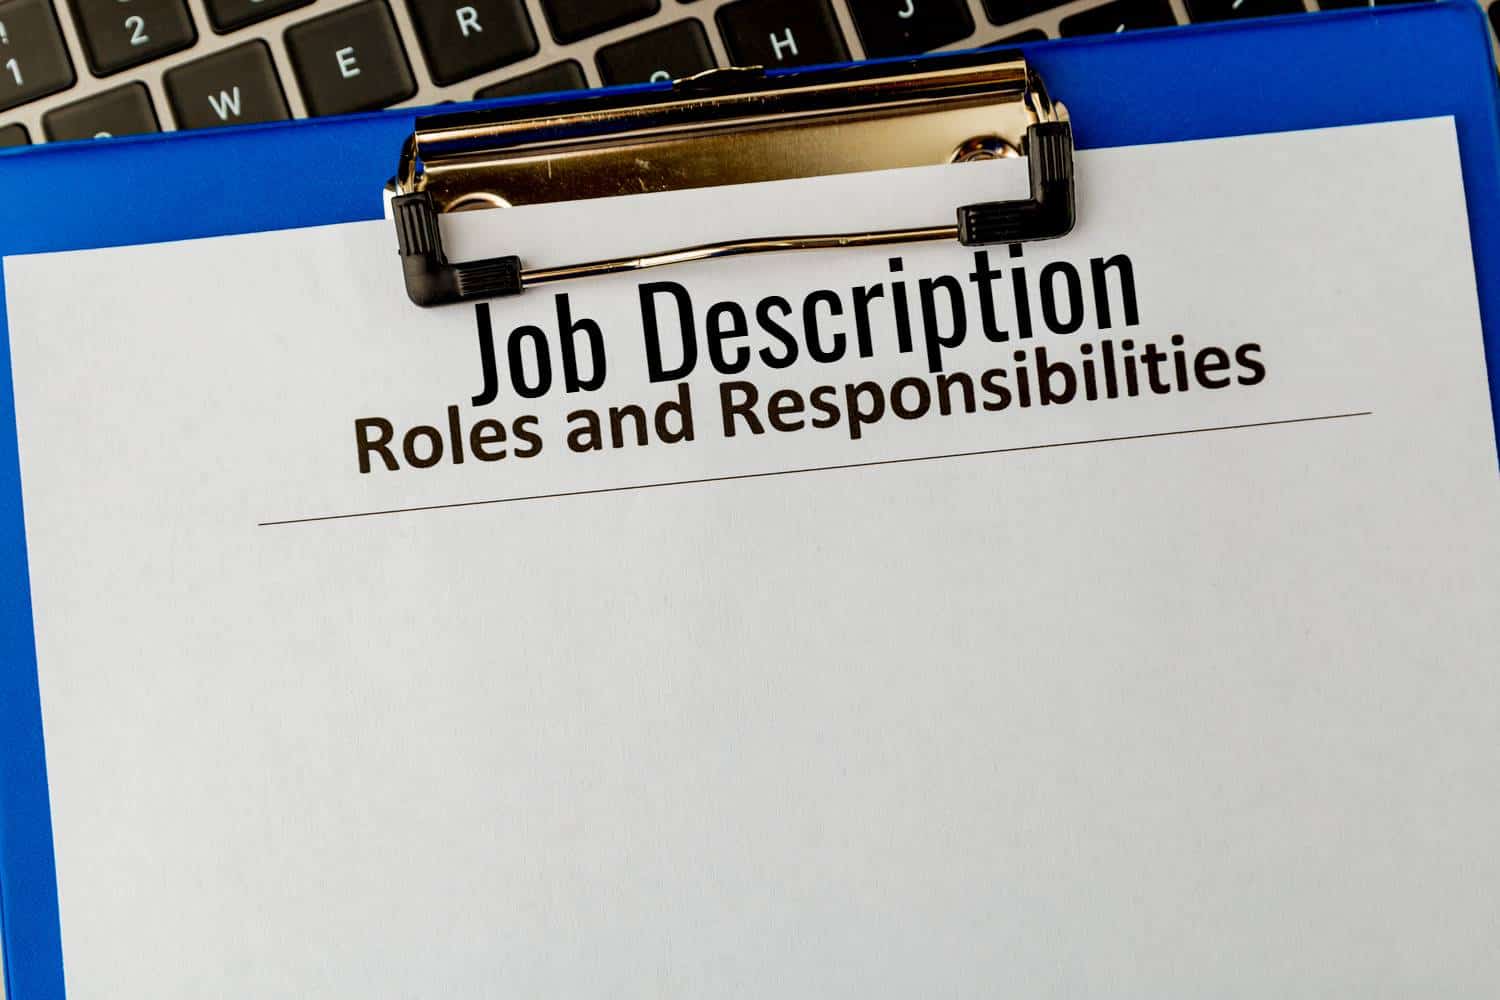 job description for early childhood teacher educator manager staff